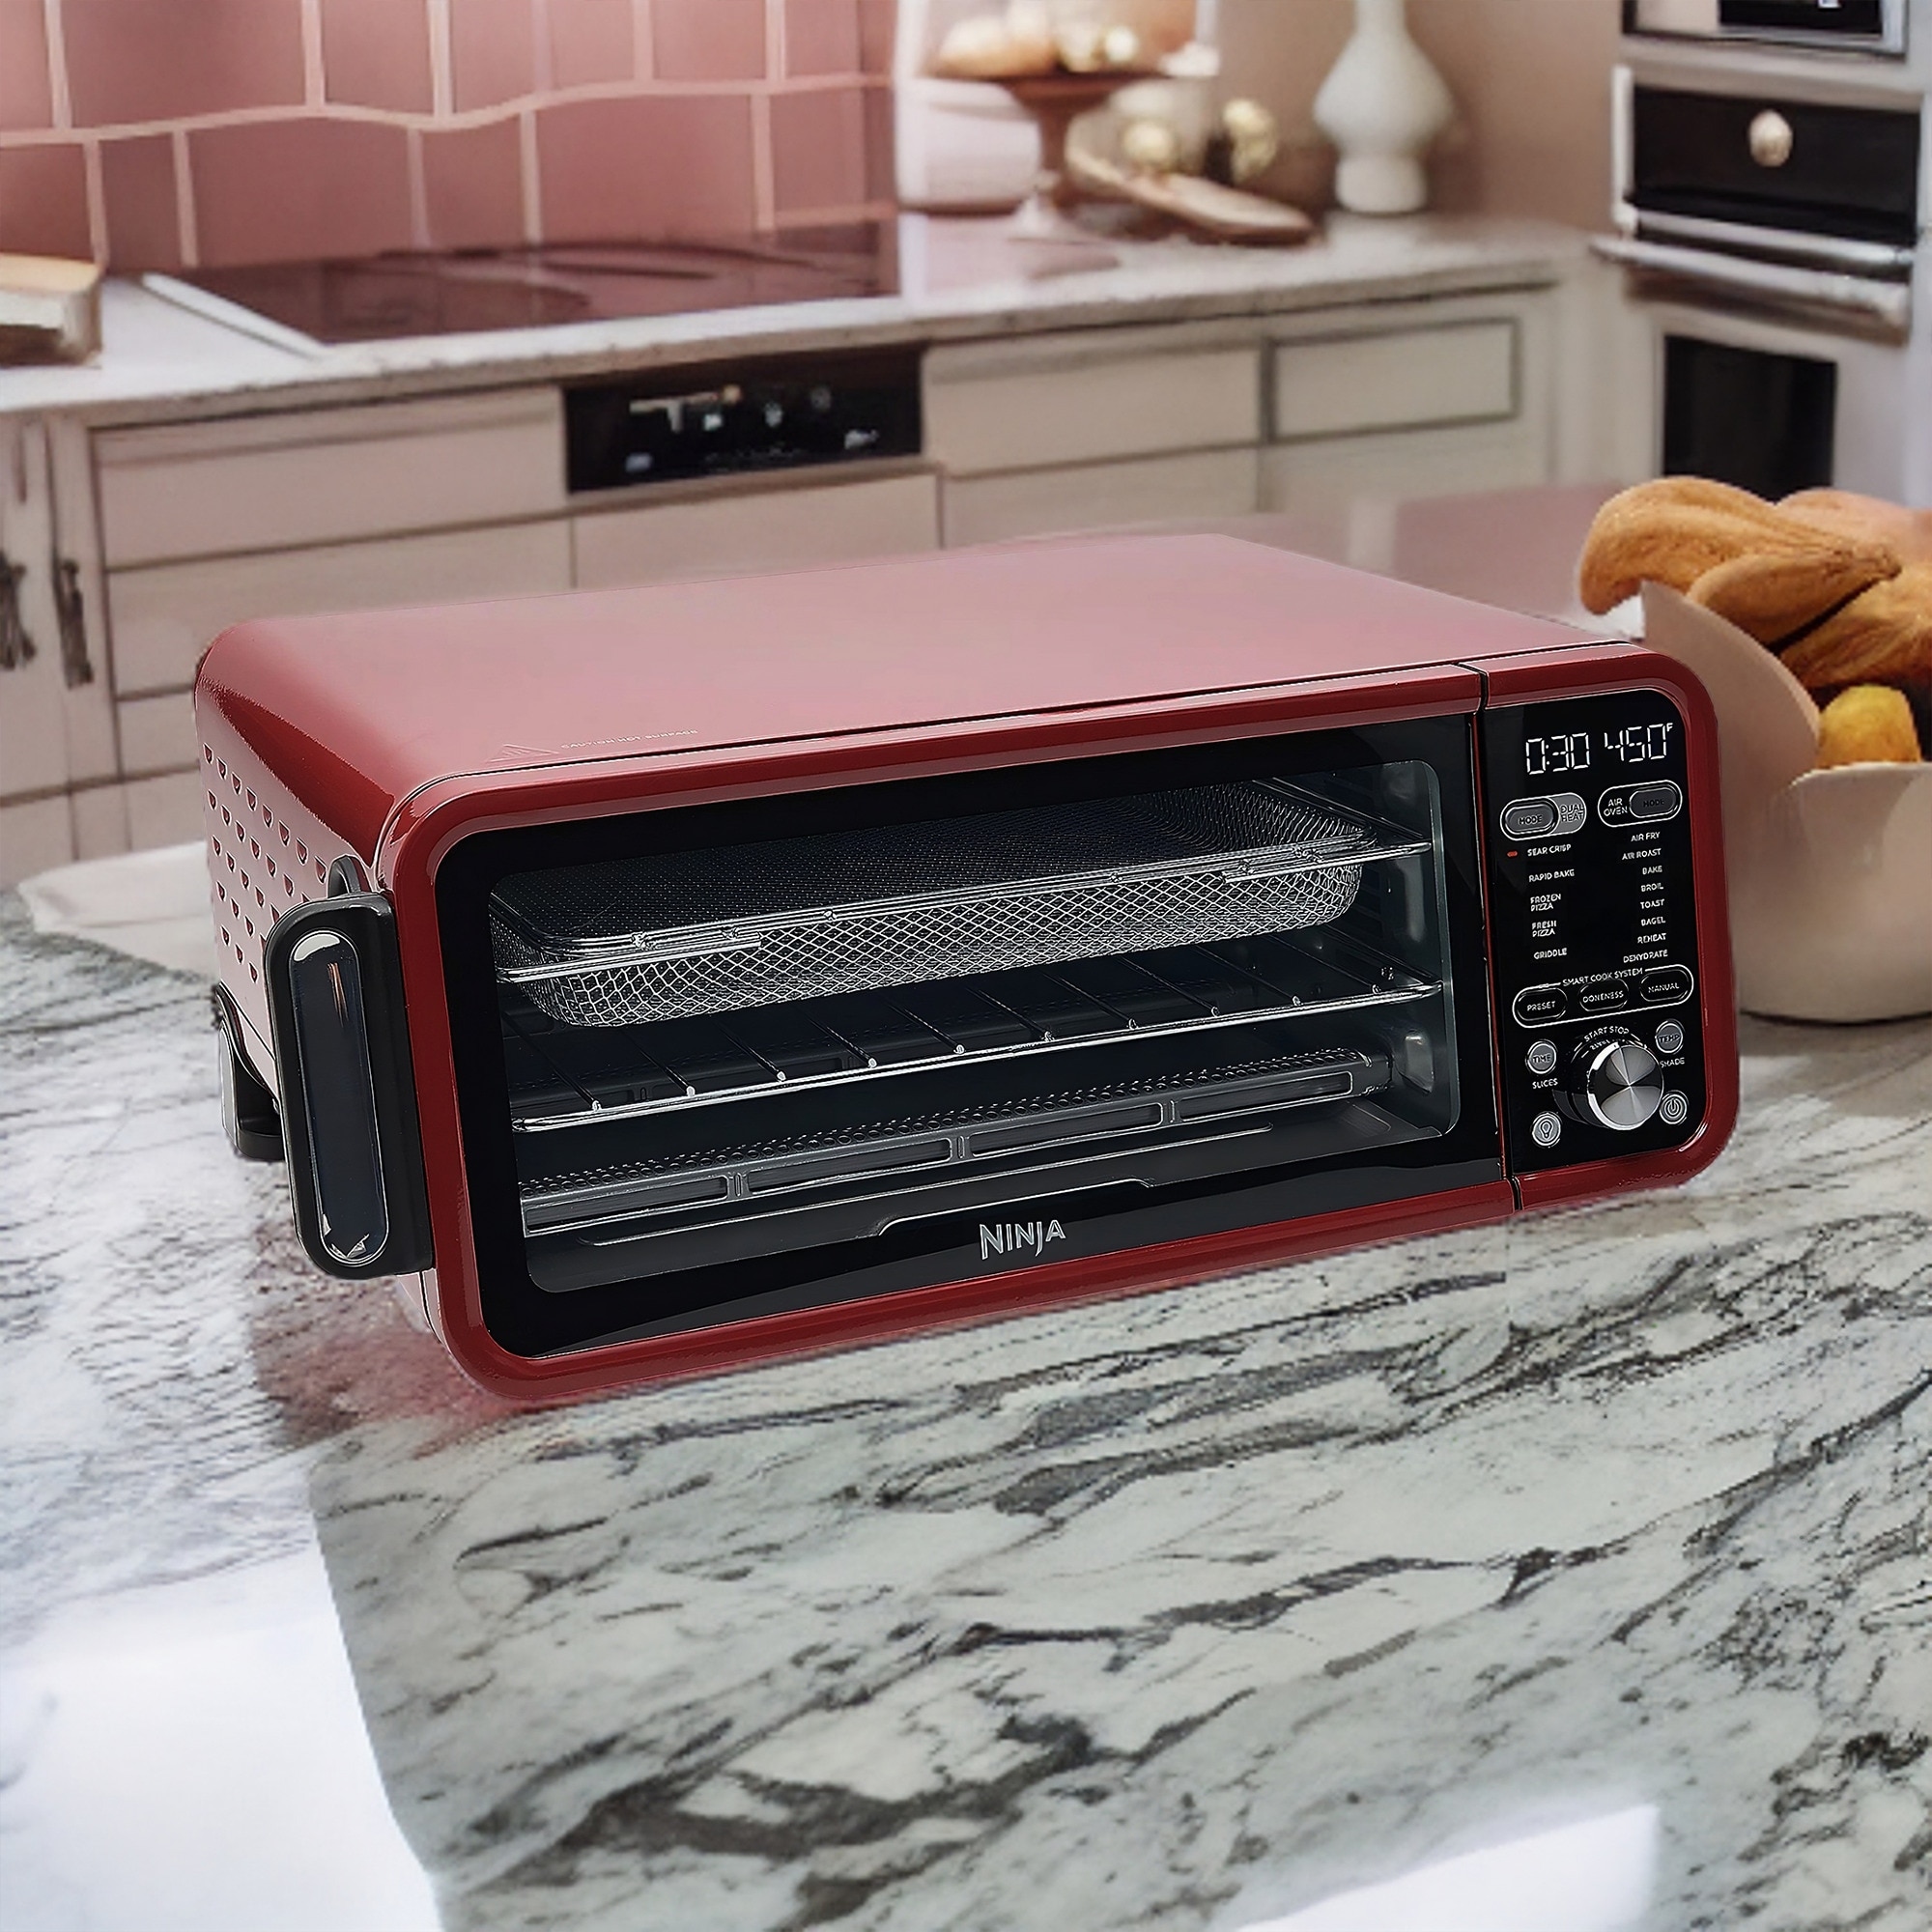 Ninja Foodi SP101 Digital Air Fry Oven - XL Cooking for Family